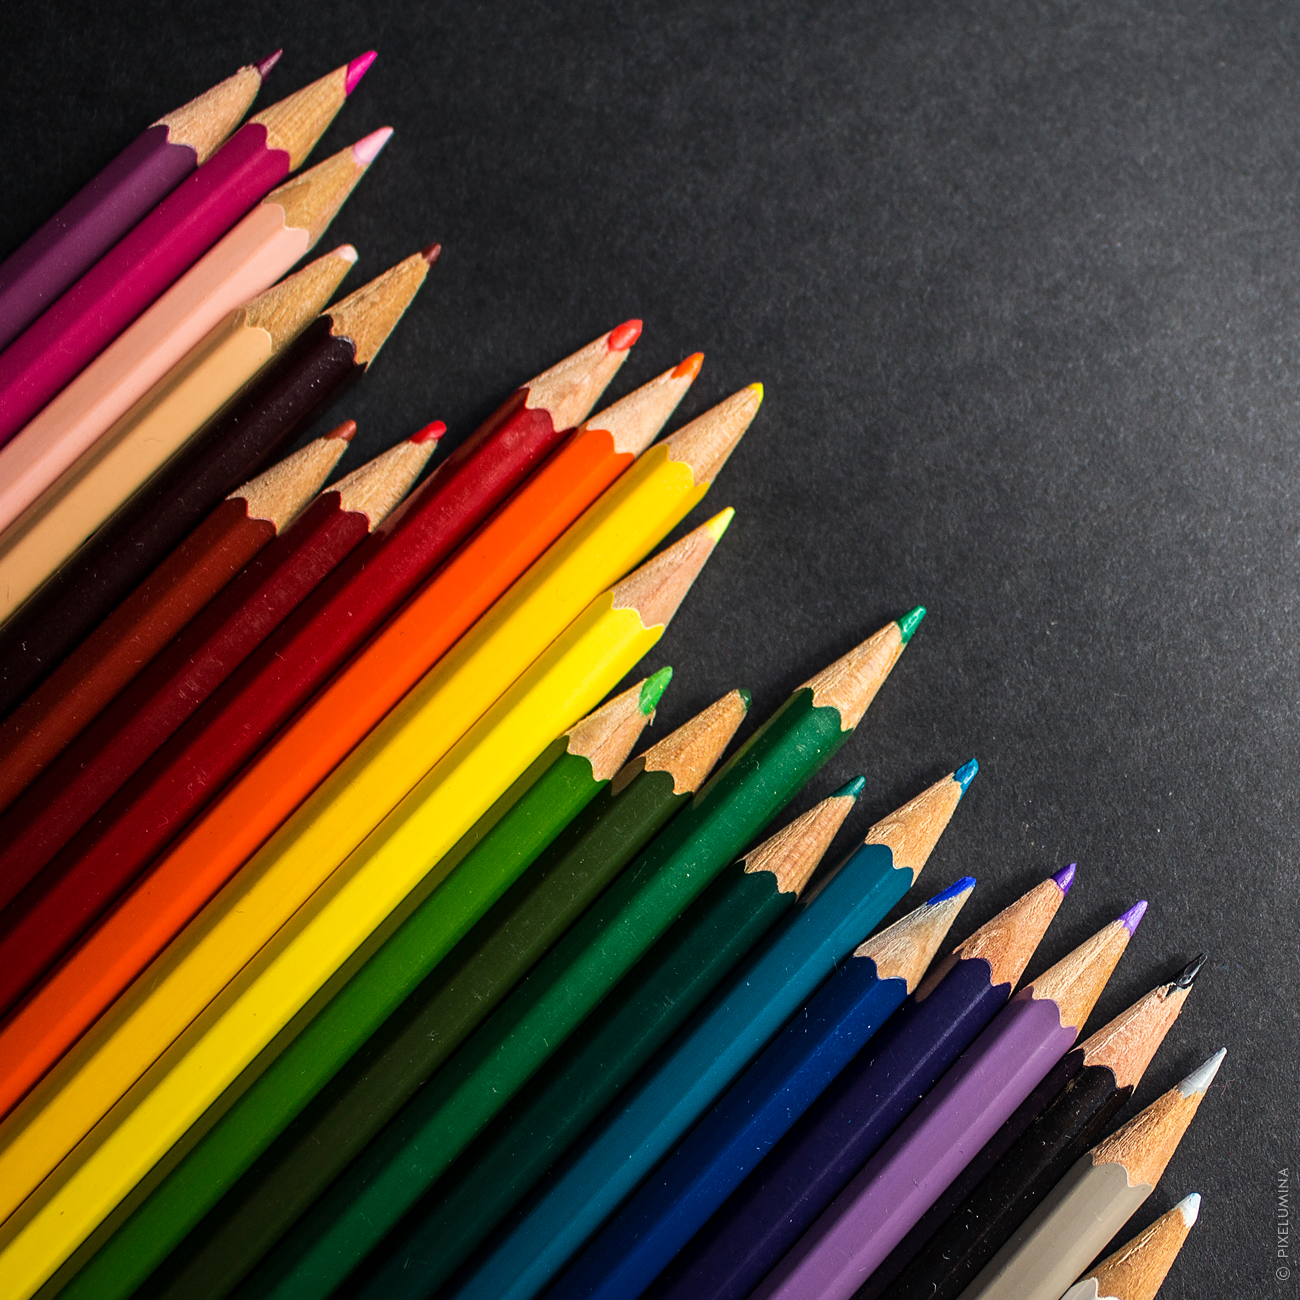 Colorful Pencils; © Pixelumina